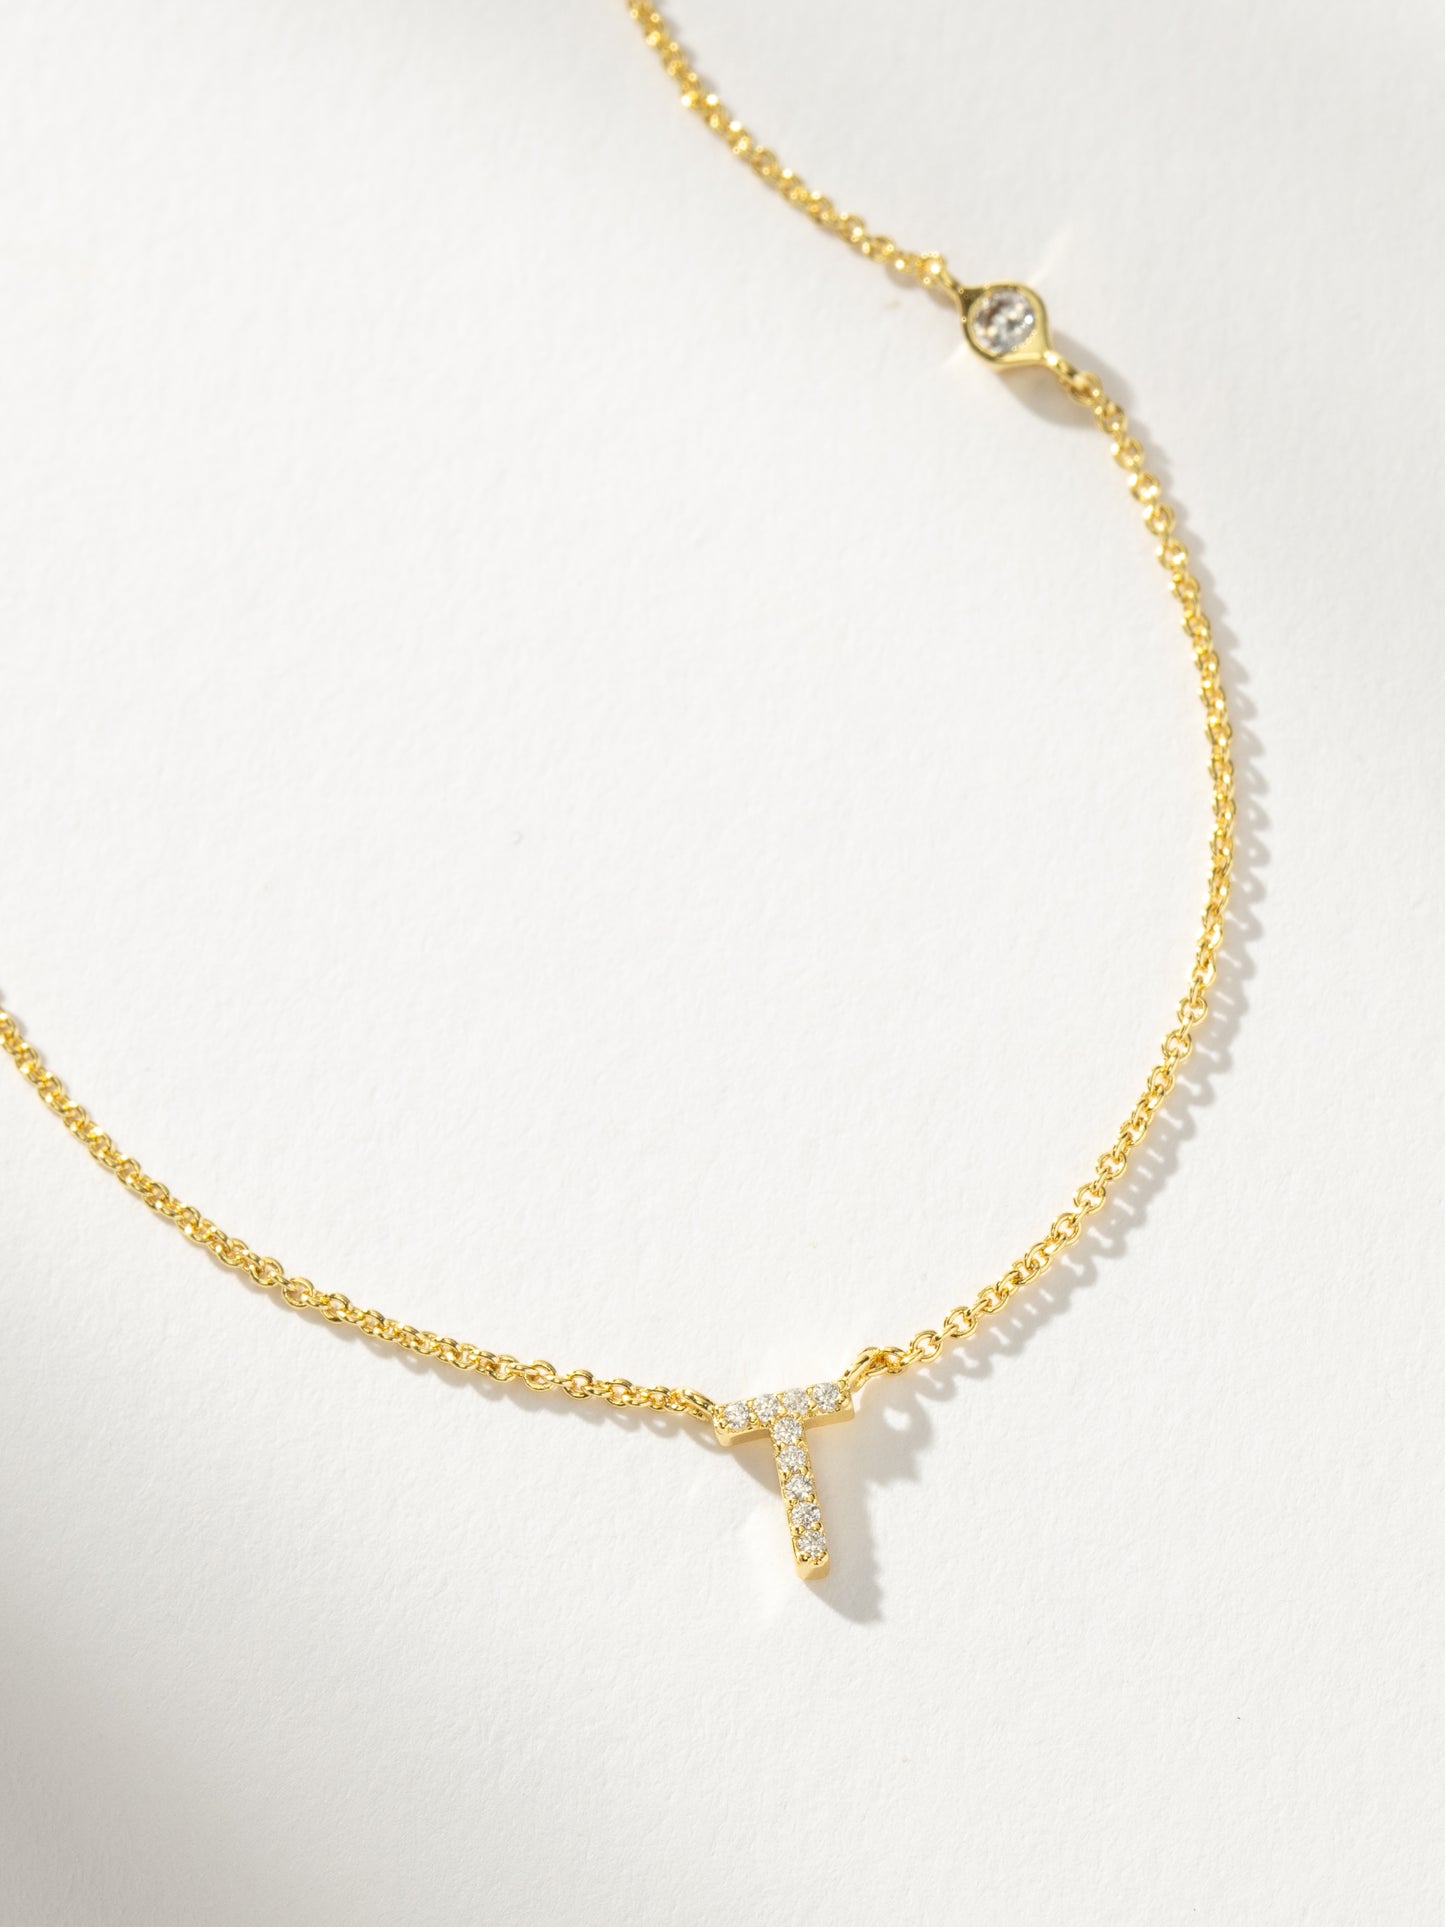 Pavé Initial Necklace | Gold T | Product Detail Image | Uncommon James